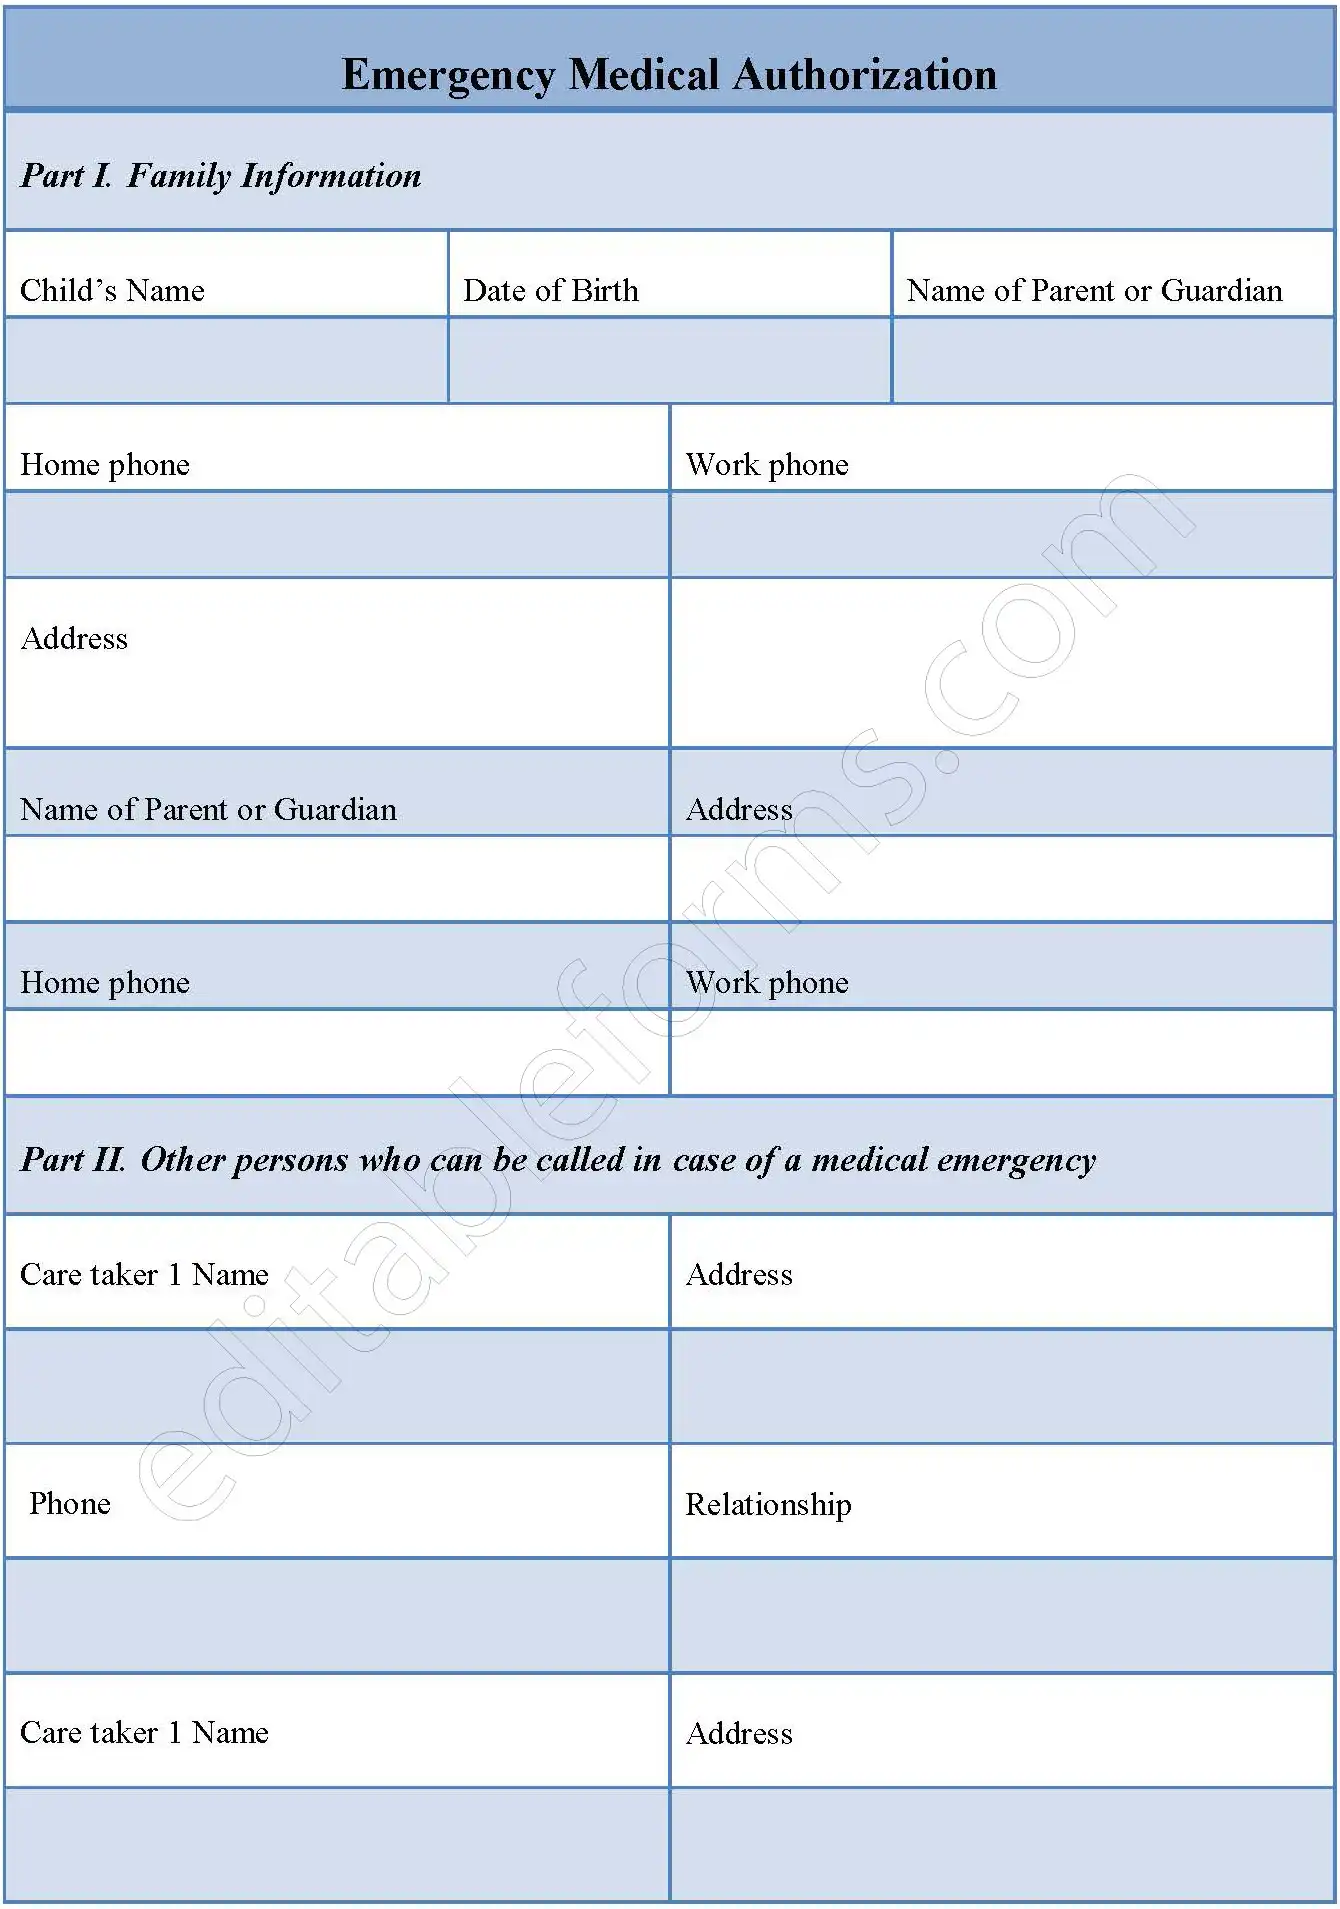 Emergency Medical Authorization Fillable PDF Form